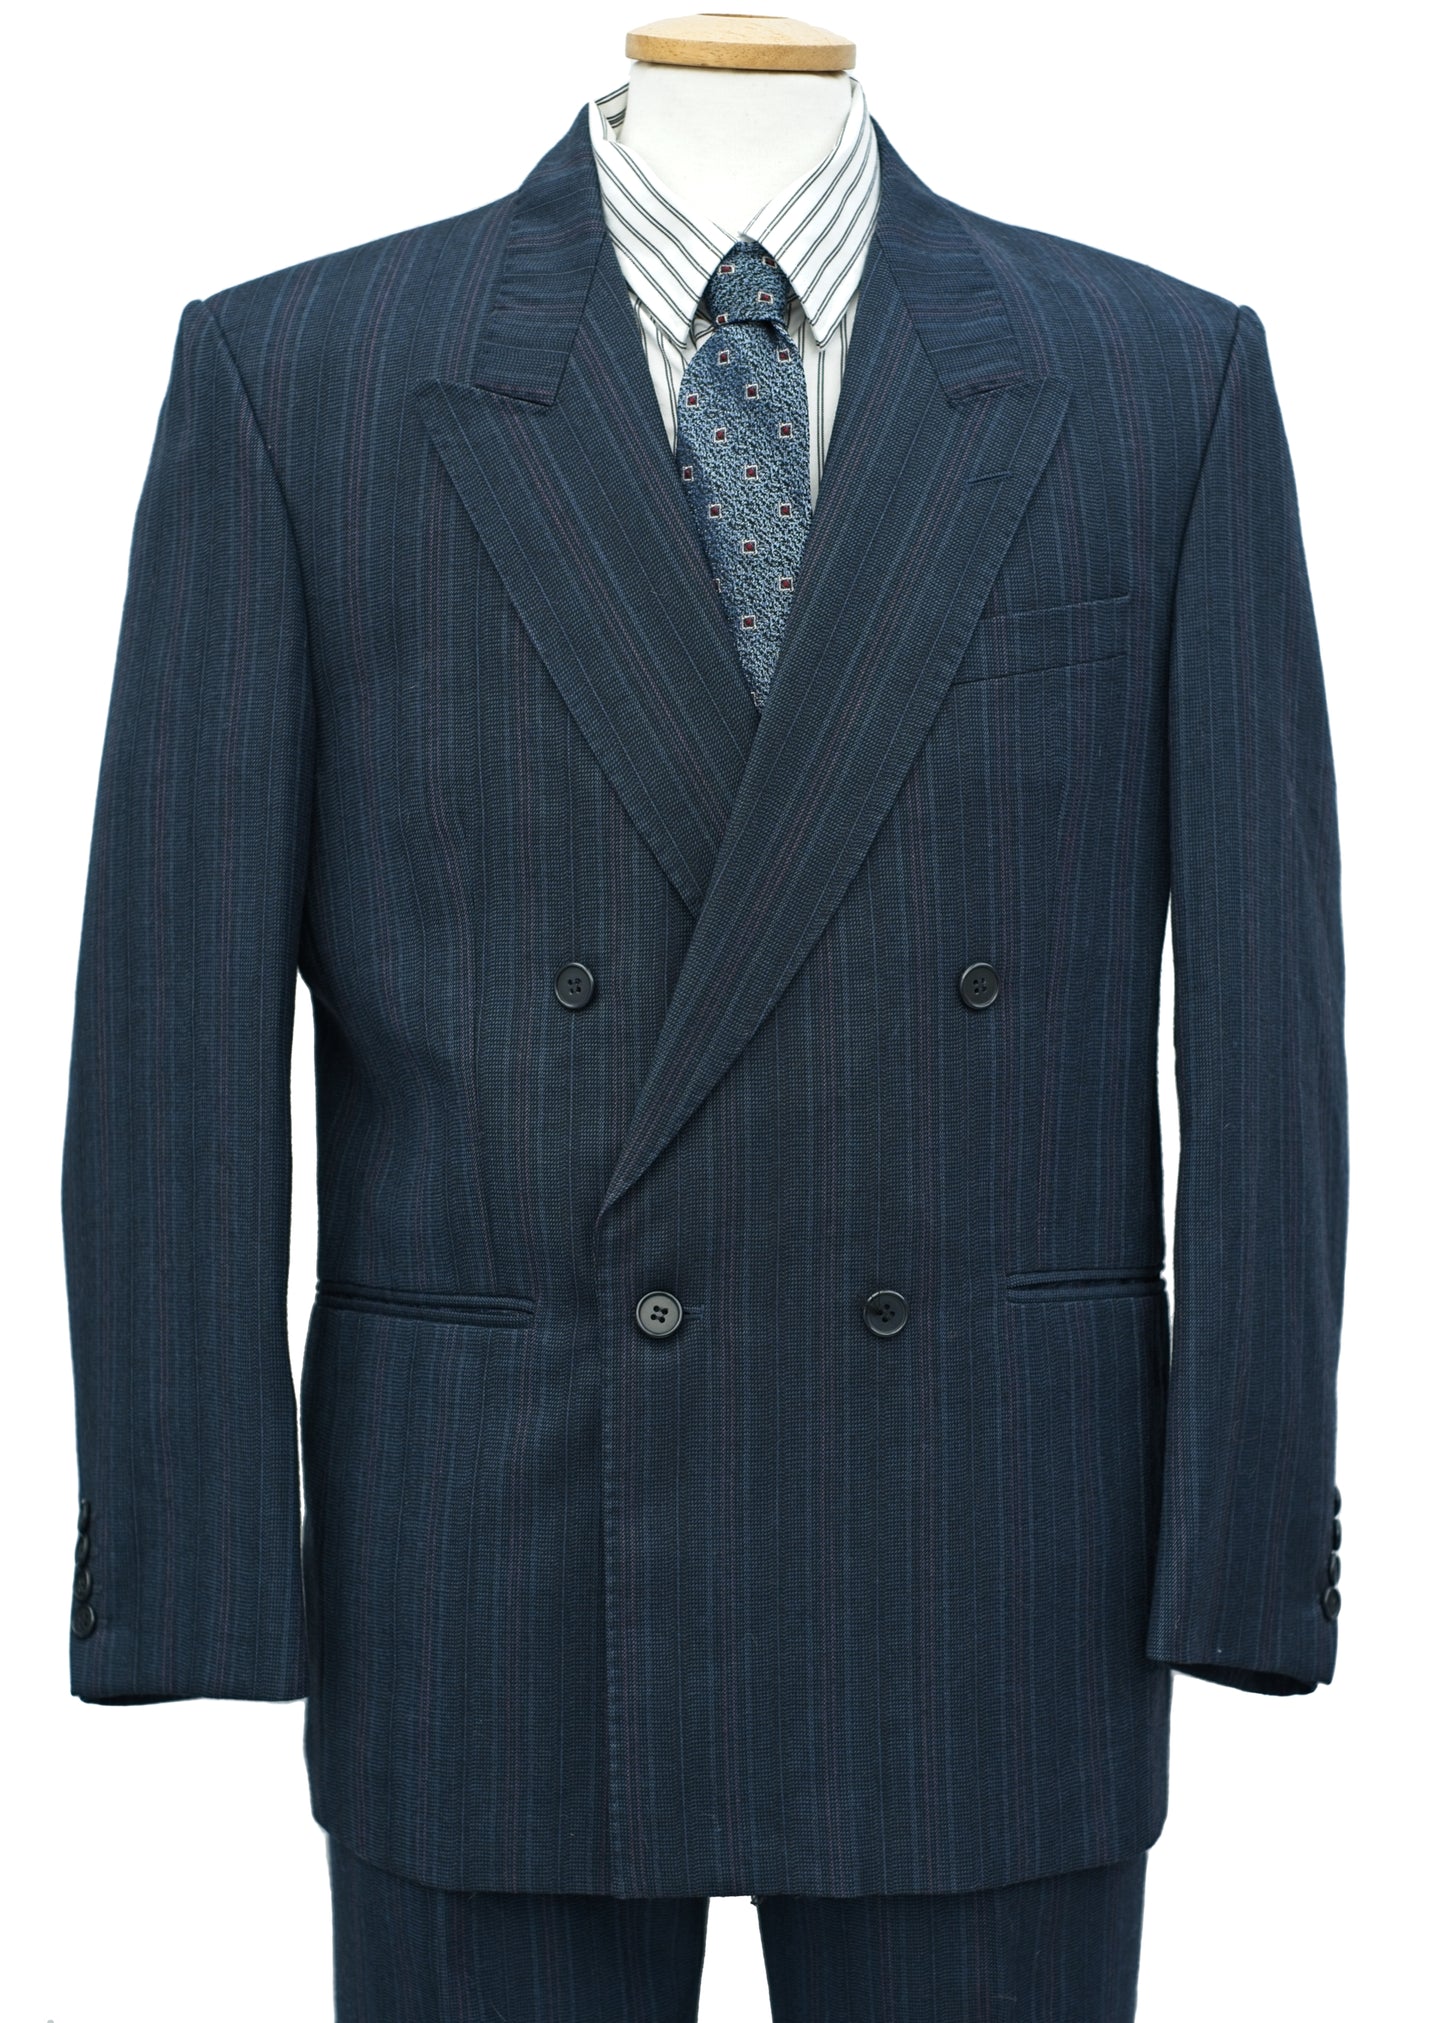 Vintage Men's Blue Double Breasted Suit by Centaur • 40S